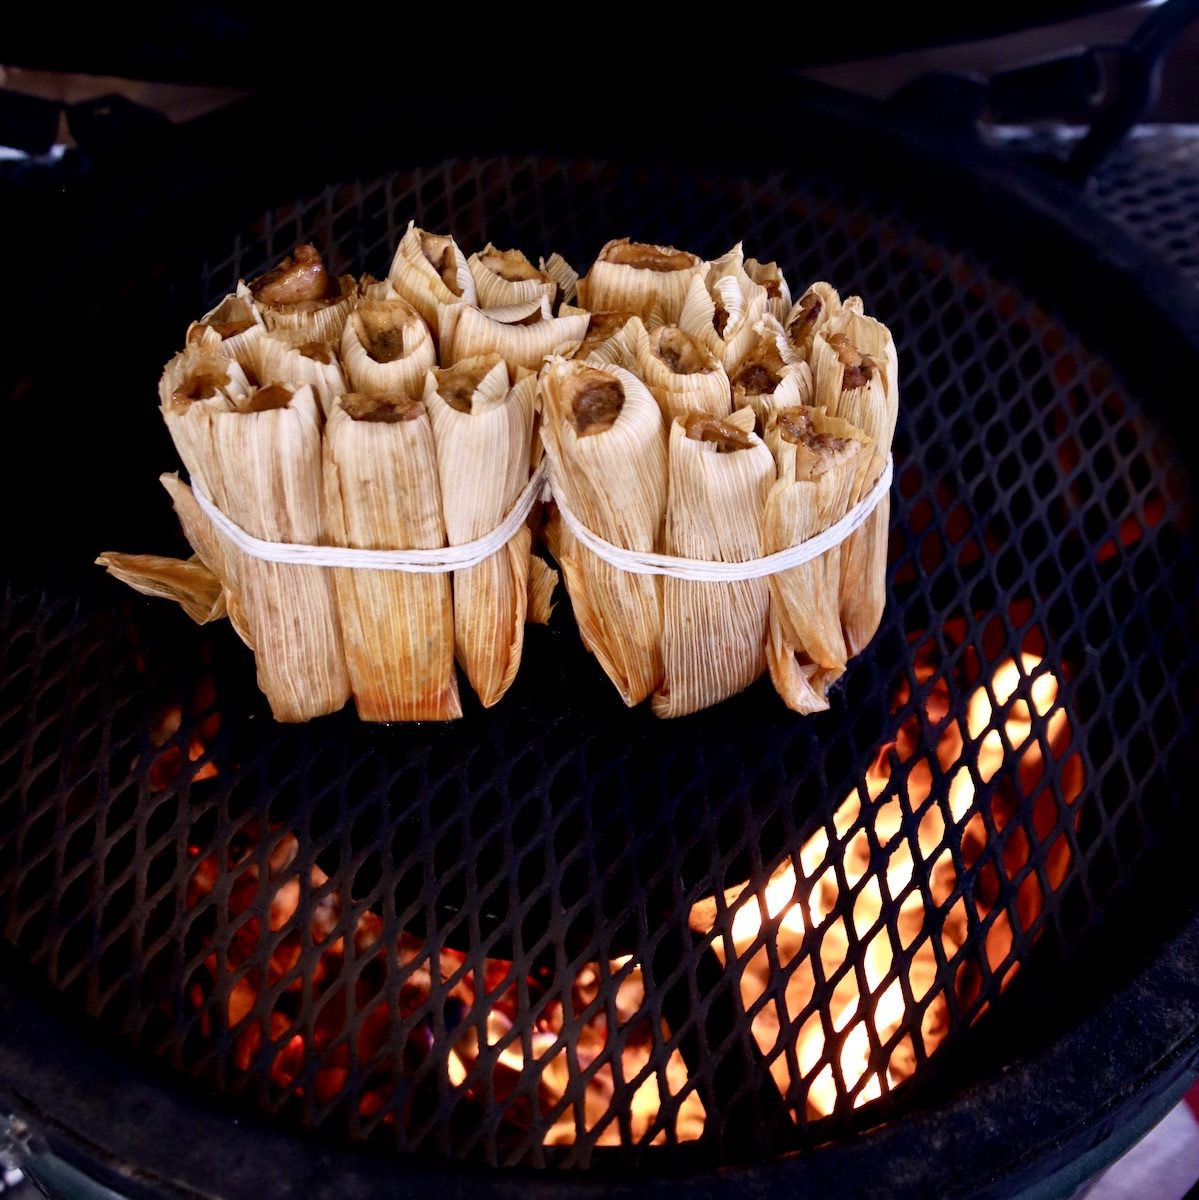 grilling tamales tied up in 2 bundles